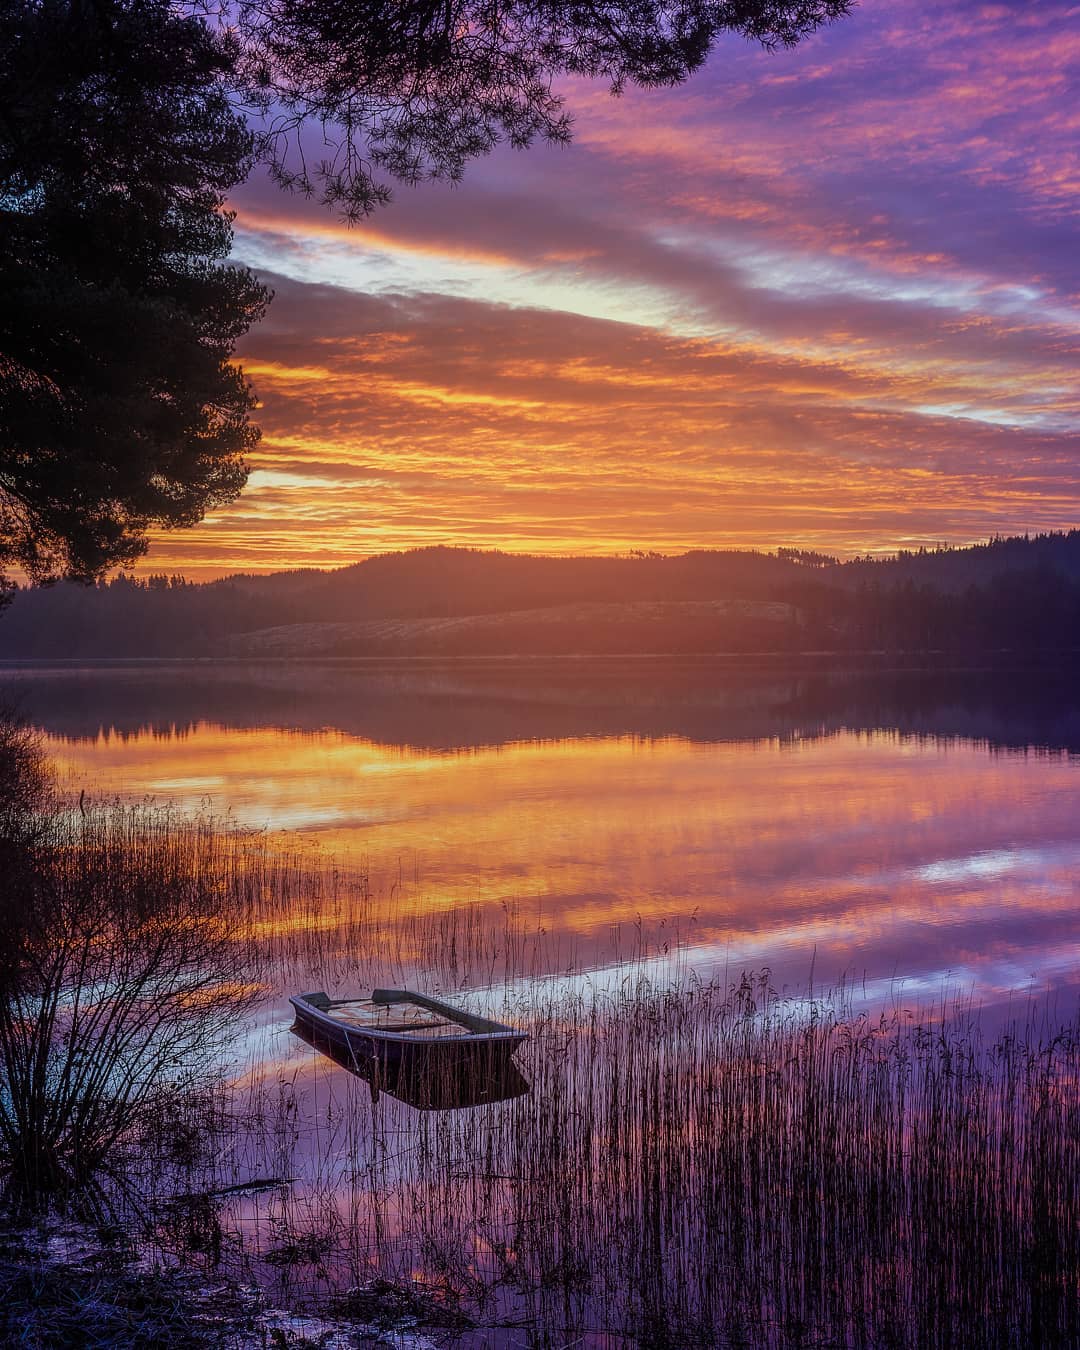 Sunrise at Loch Ard by Mark Callander.